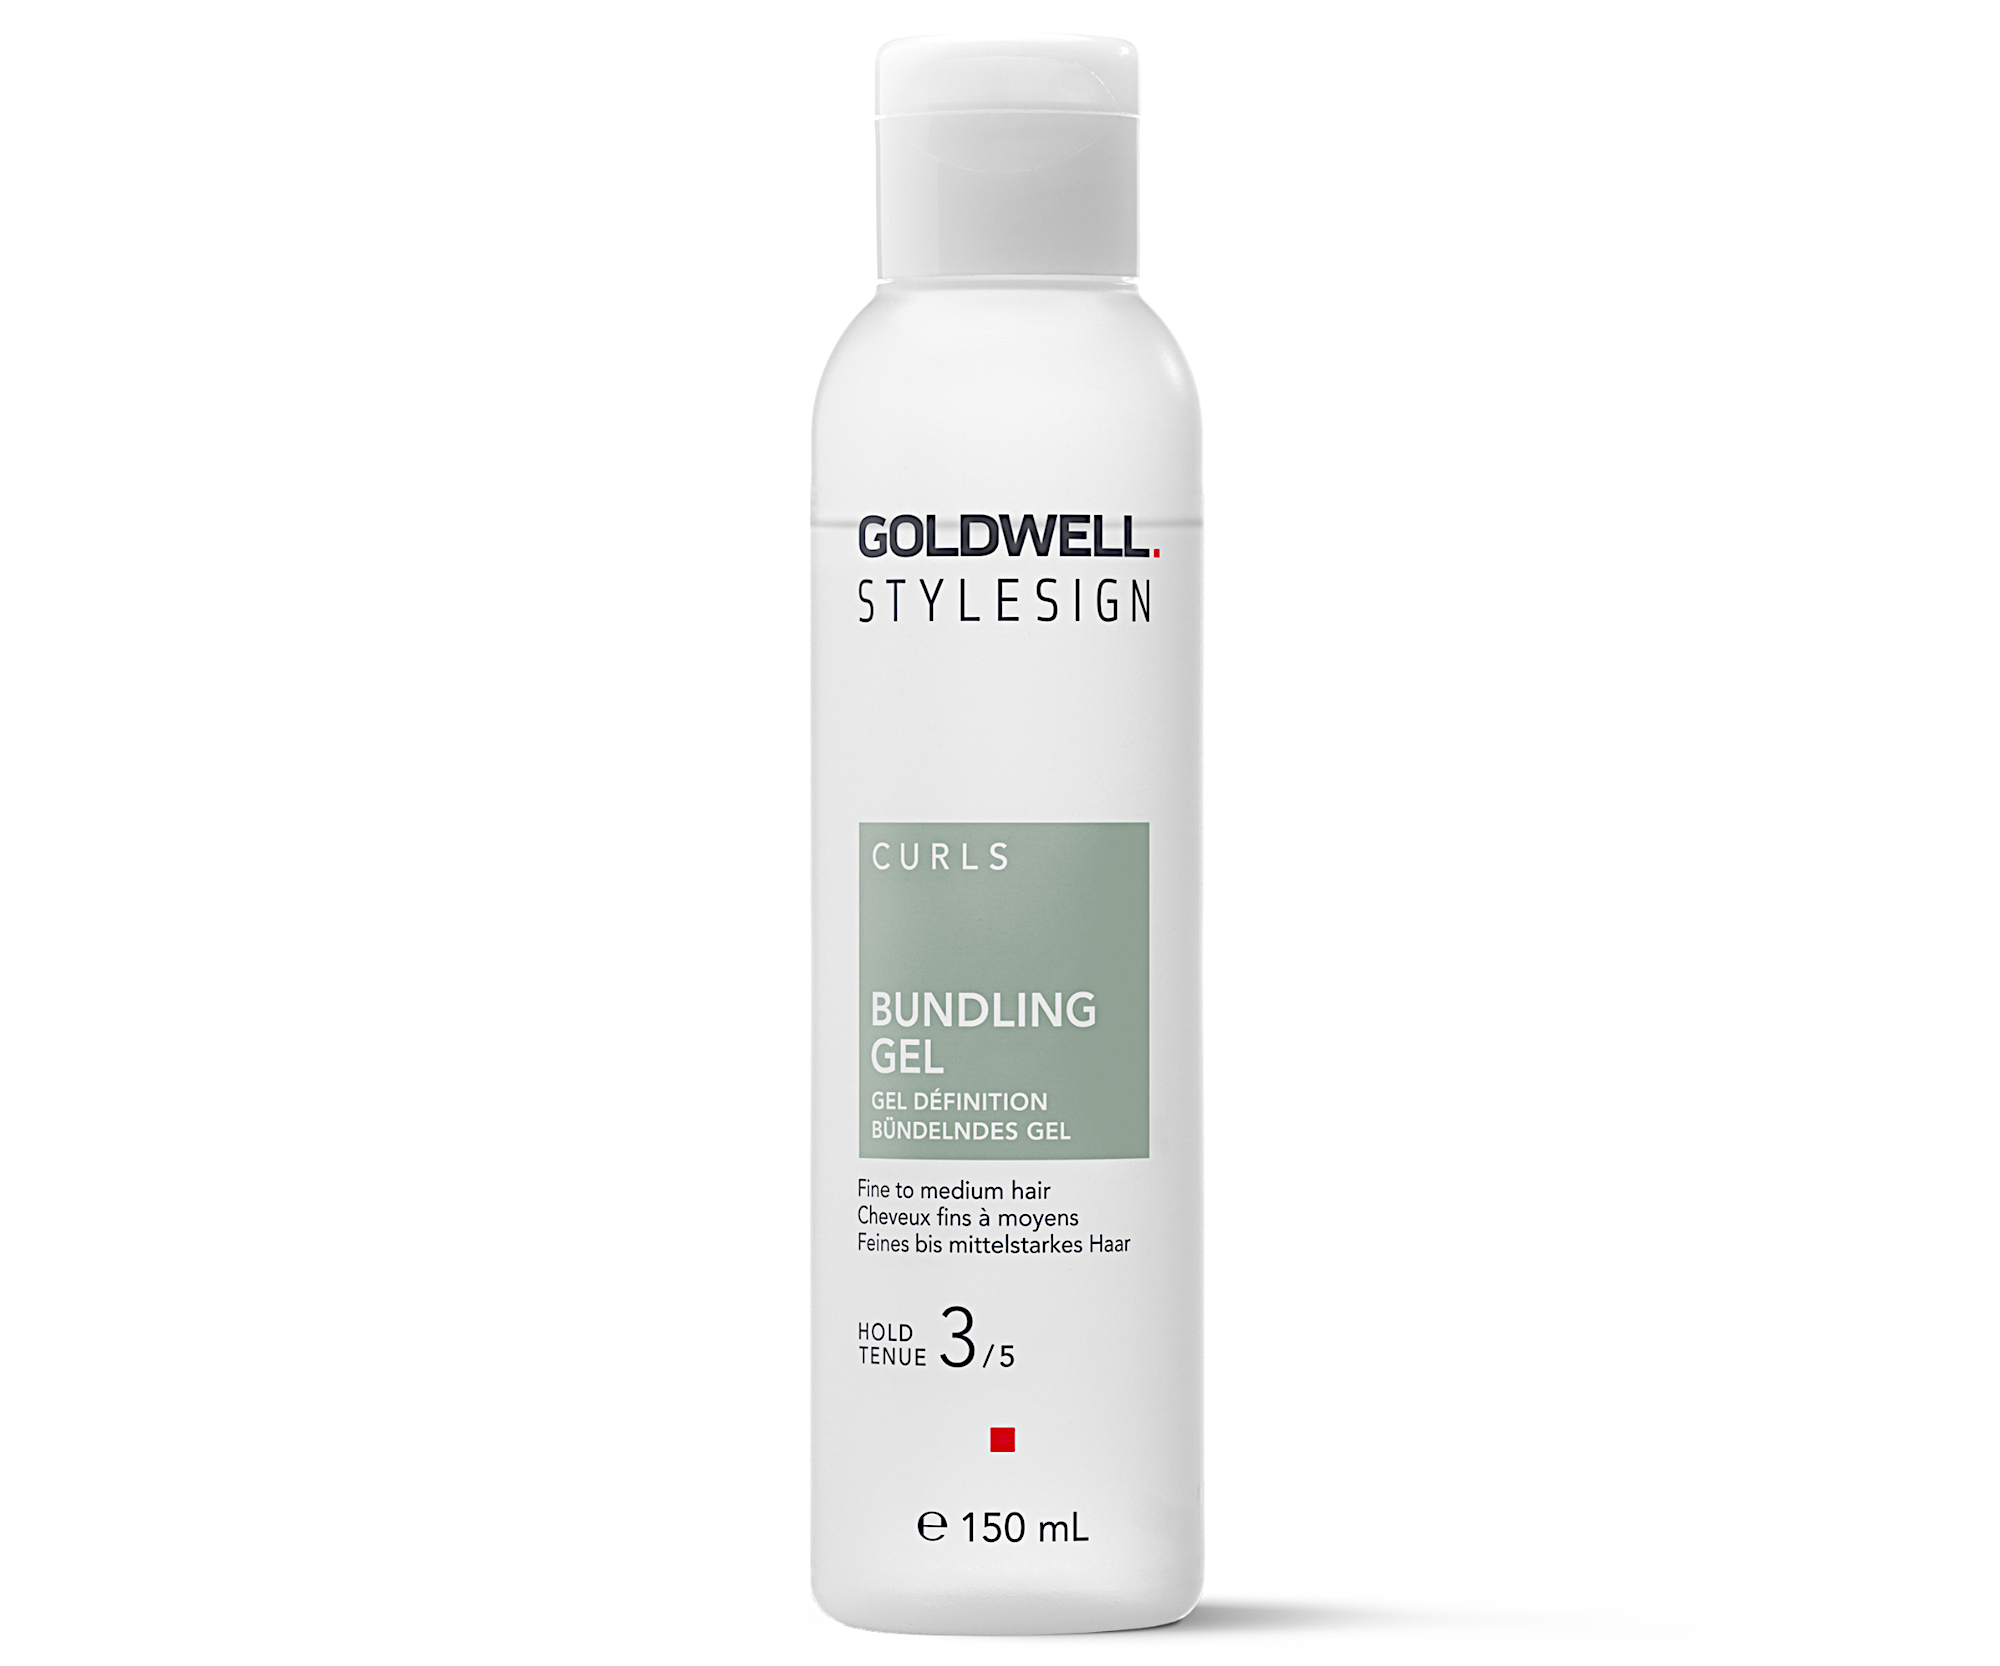 Gel pro definici a kontrolu kudrnatých vlasů Goldwell Stylesign Curls Bundling Gel - 150 ml + dárek zdarma